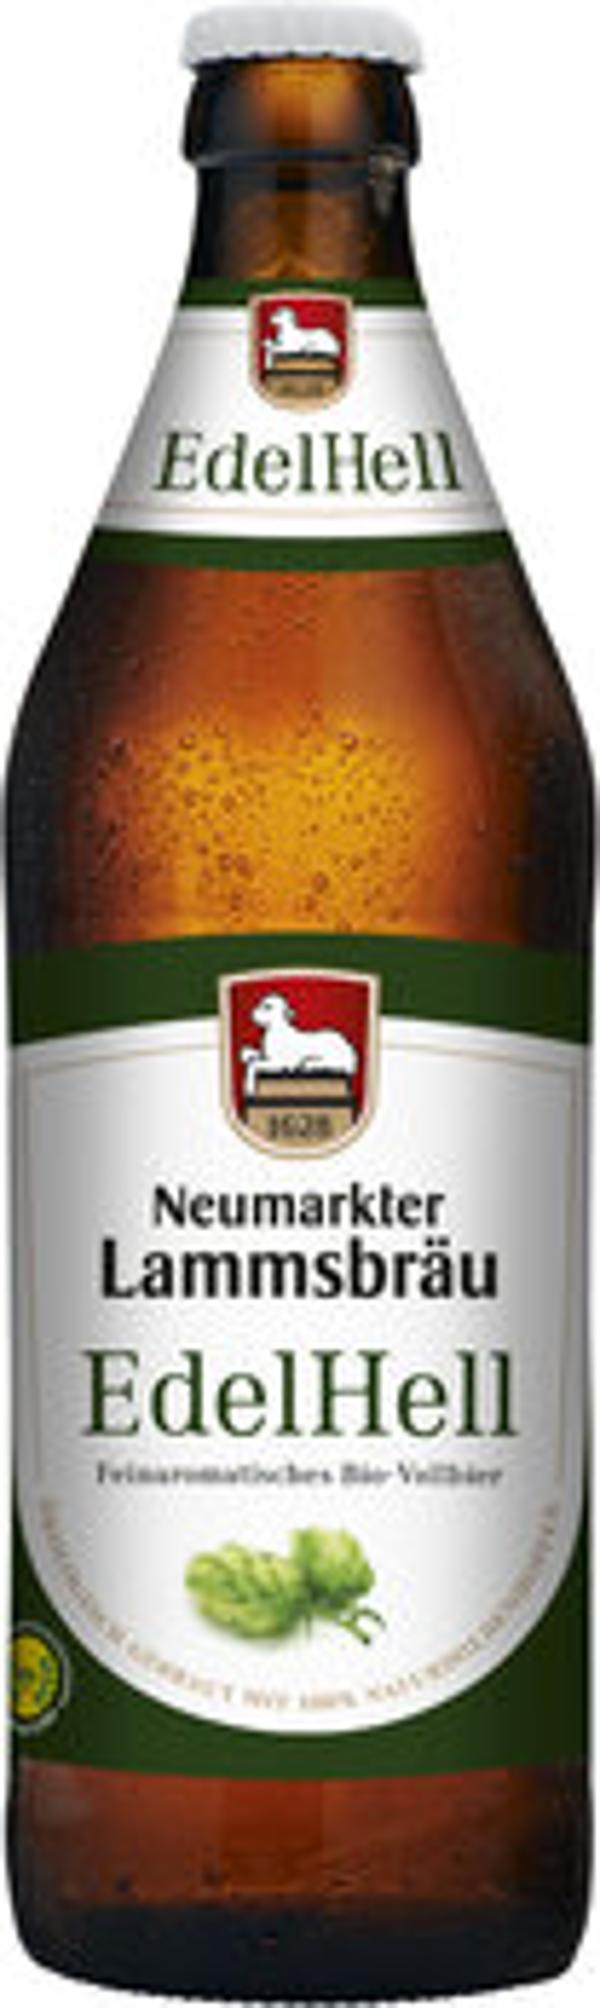 Produktfoto zu Lammsbräu Edelhell 0,5L